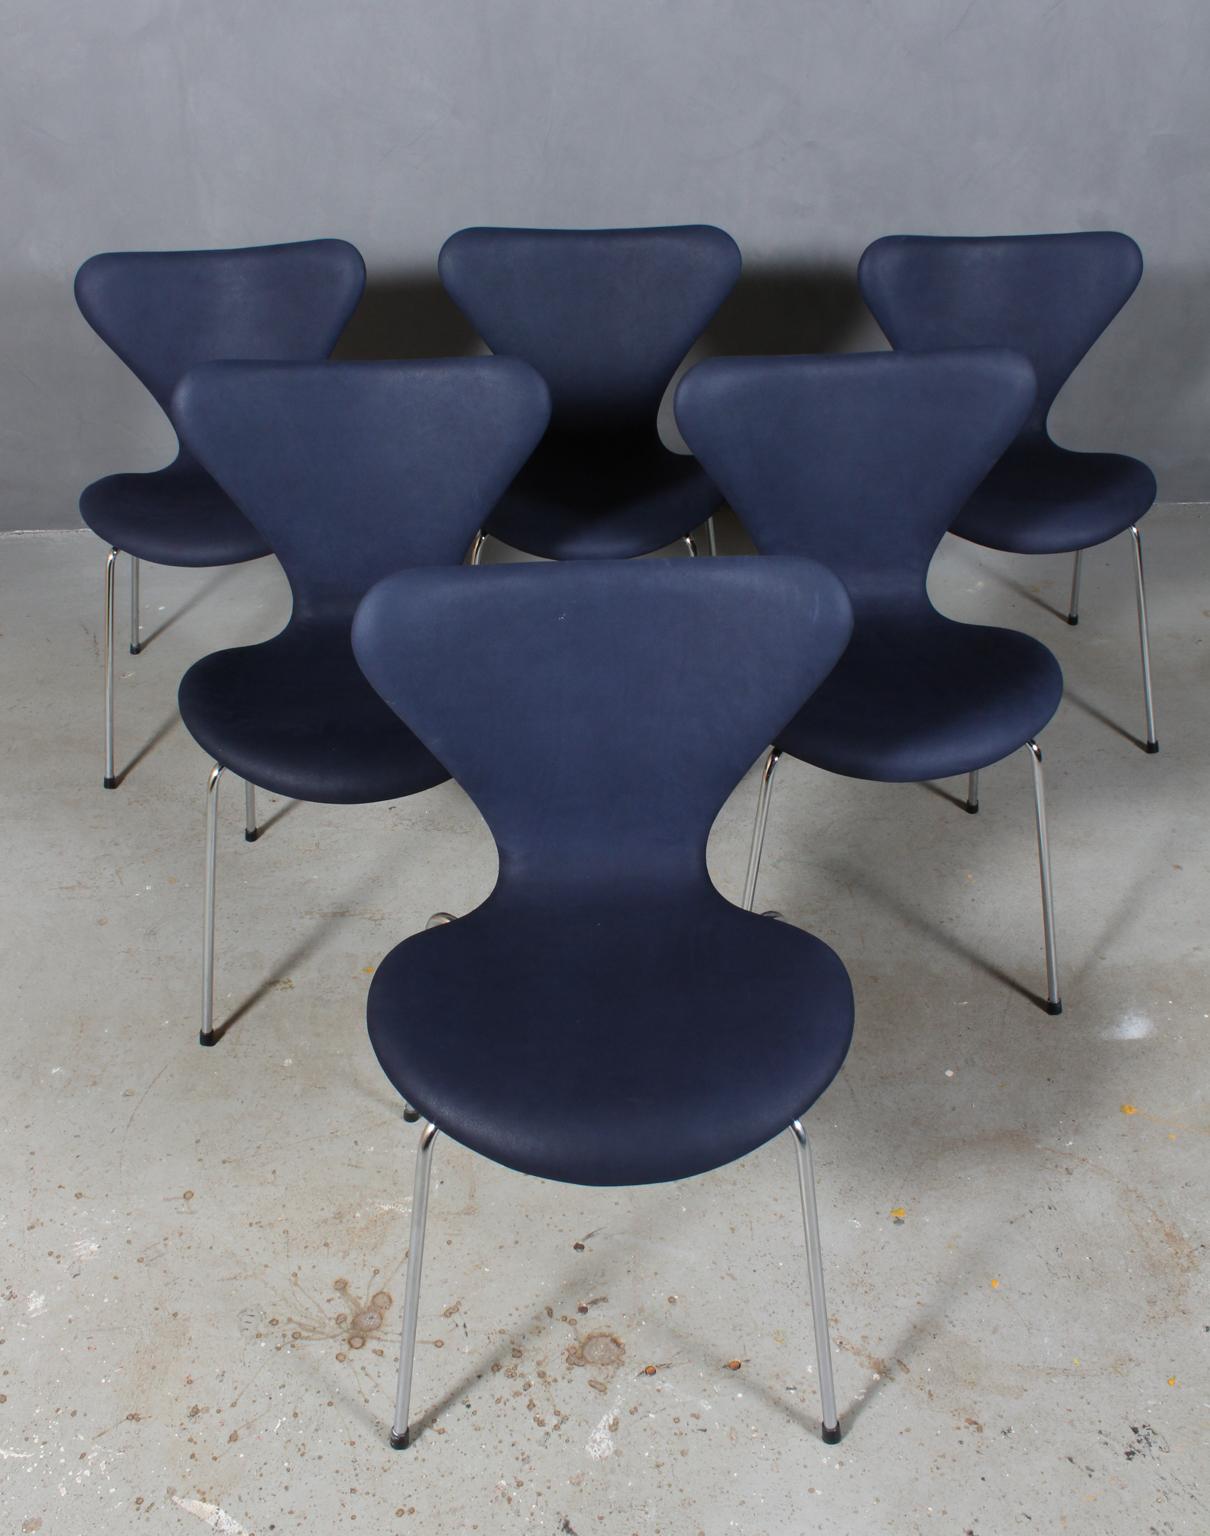 Arne Jacobsen dining chair new upholstered with nubuck aniline leather.

Base of chrome steel tube.

Model 3107 Syveren, made by Fritz Hansen.